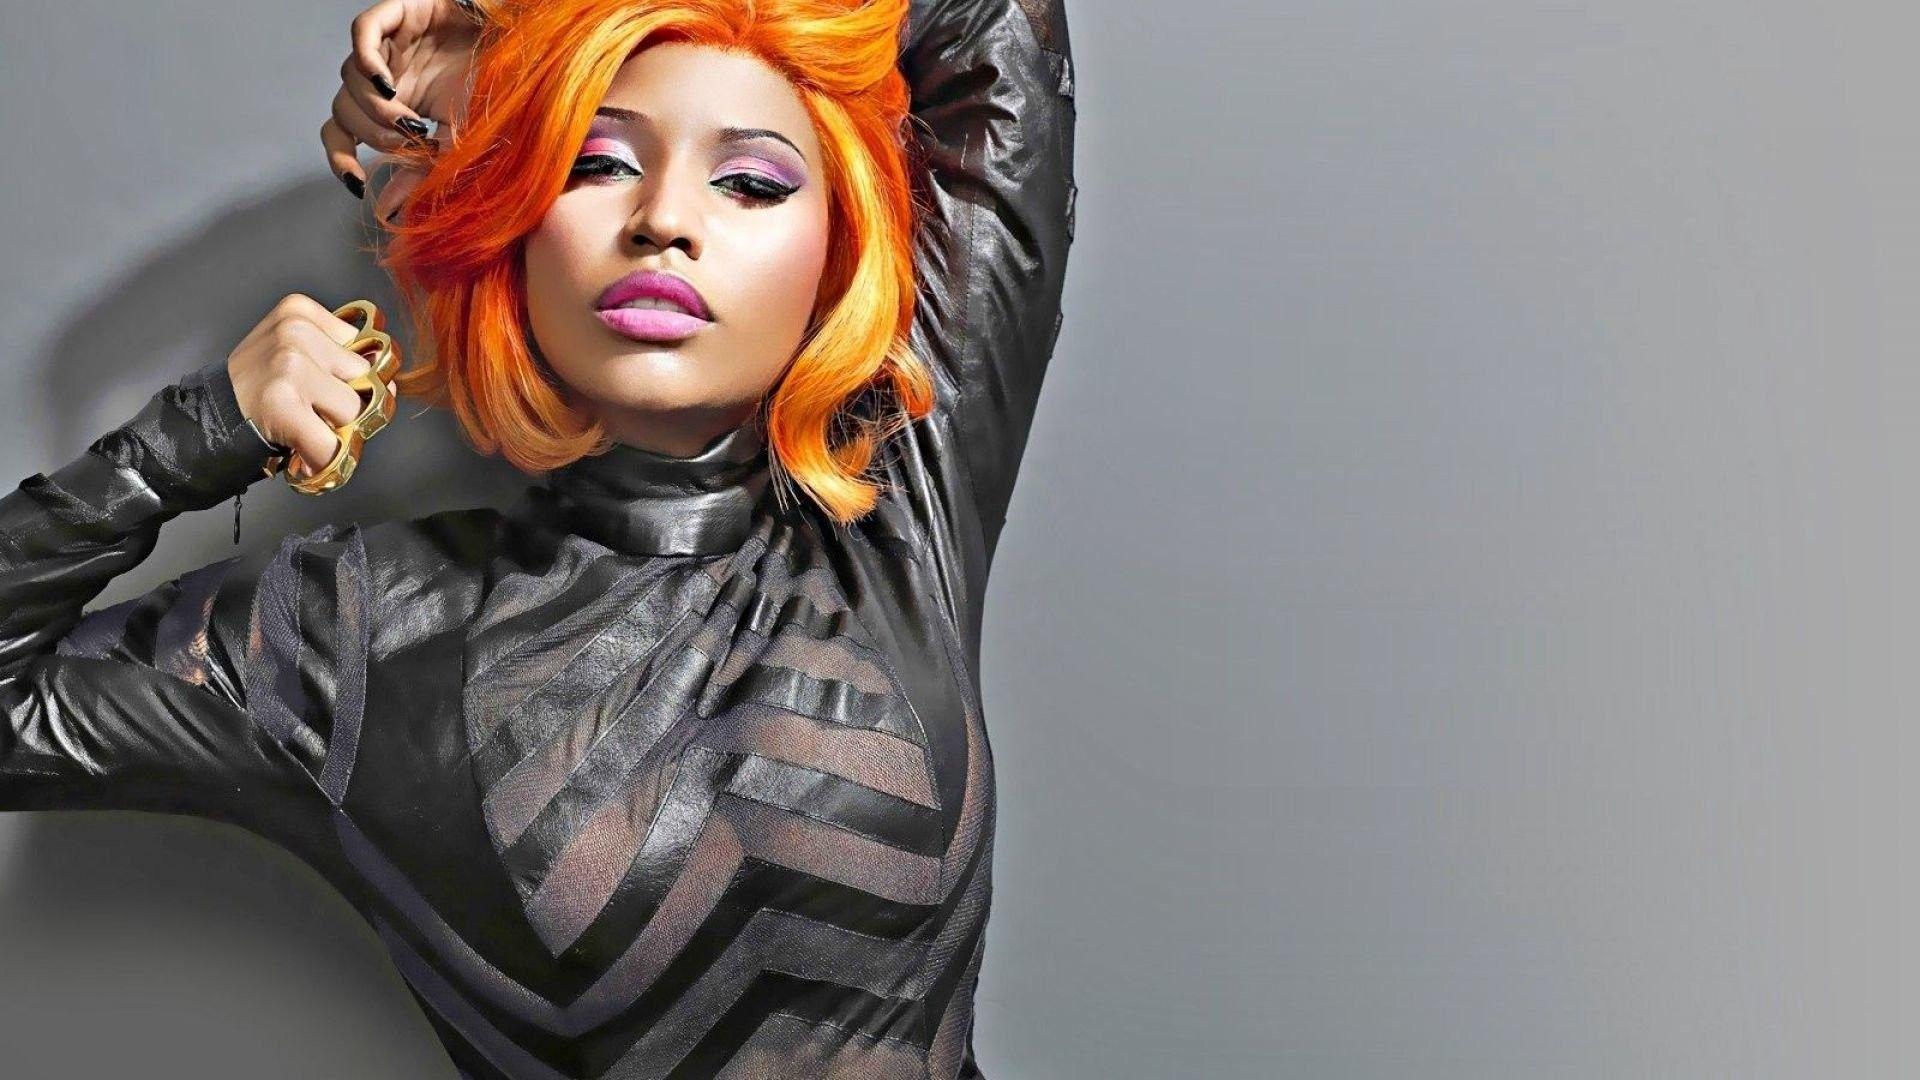 Nicki Minaj Hd Wallpapers Top Free Nicki Minaj Hd Backgrounds Wallpaperaccess 